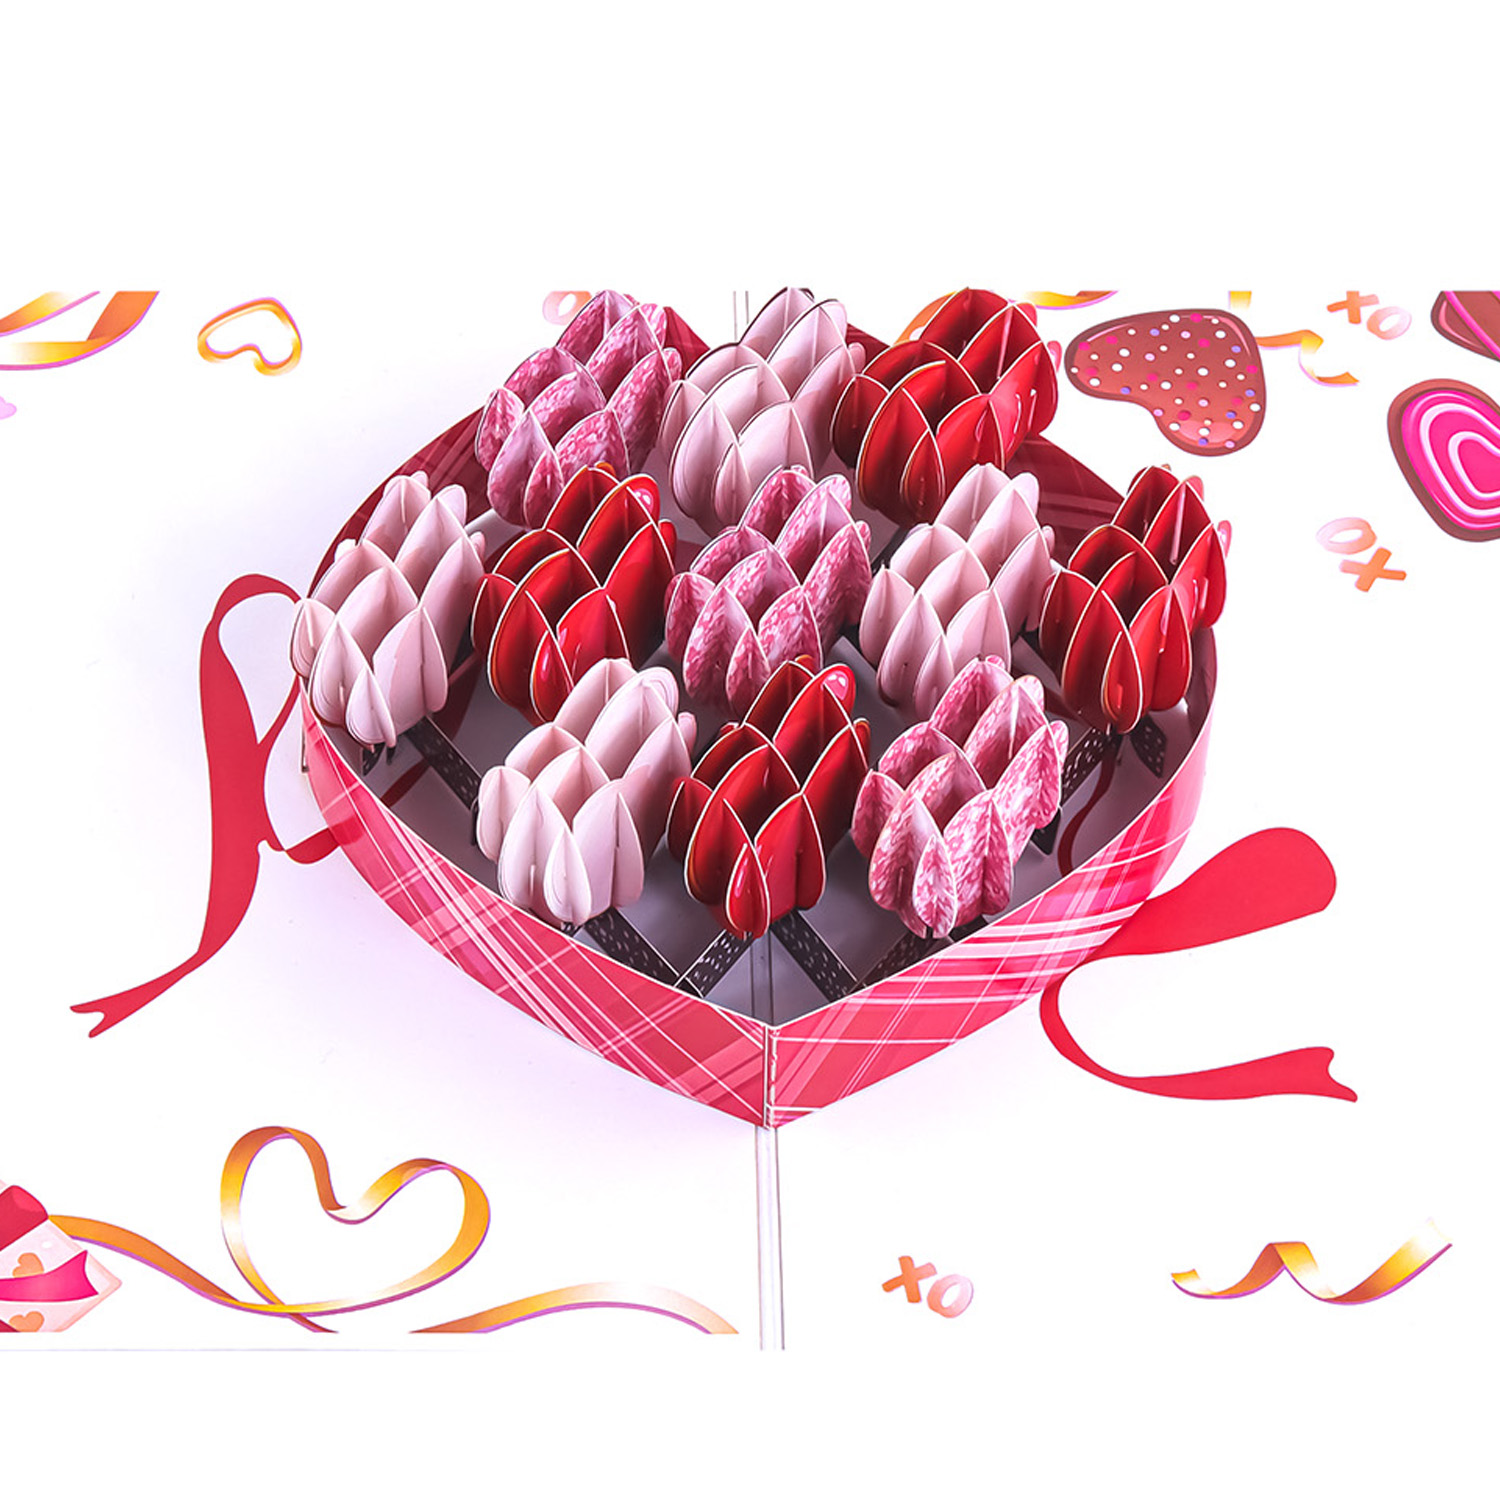 Valentine-Heart-Chocolate-Pop-Up-Card-LV64-detail-pop-up-card-wholesale-manufacturer-valentines-day-pop-up-card-flower-pop-up-card-teddy-3d-pop-up-greeting-card-2-1.jpg